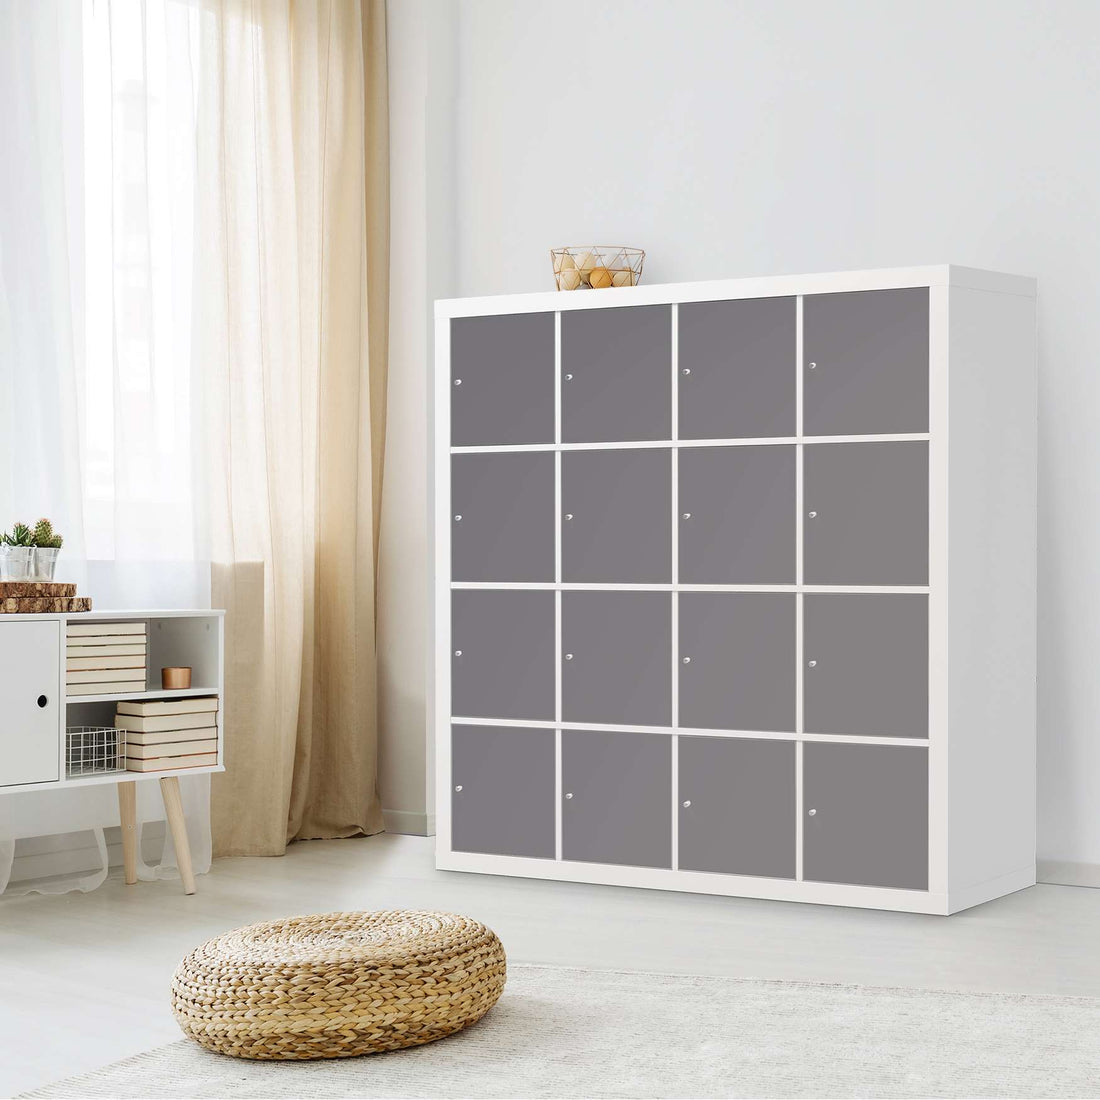 Selbstklebende Folie Grau Light - IKEA Expedit Regal 16 Türen - Wohnzimmer